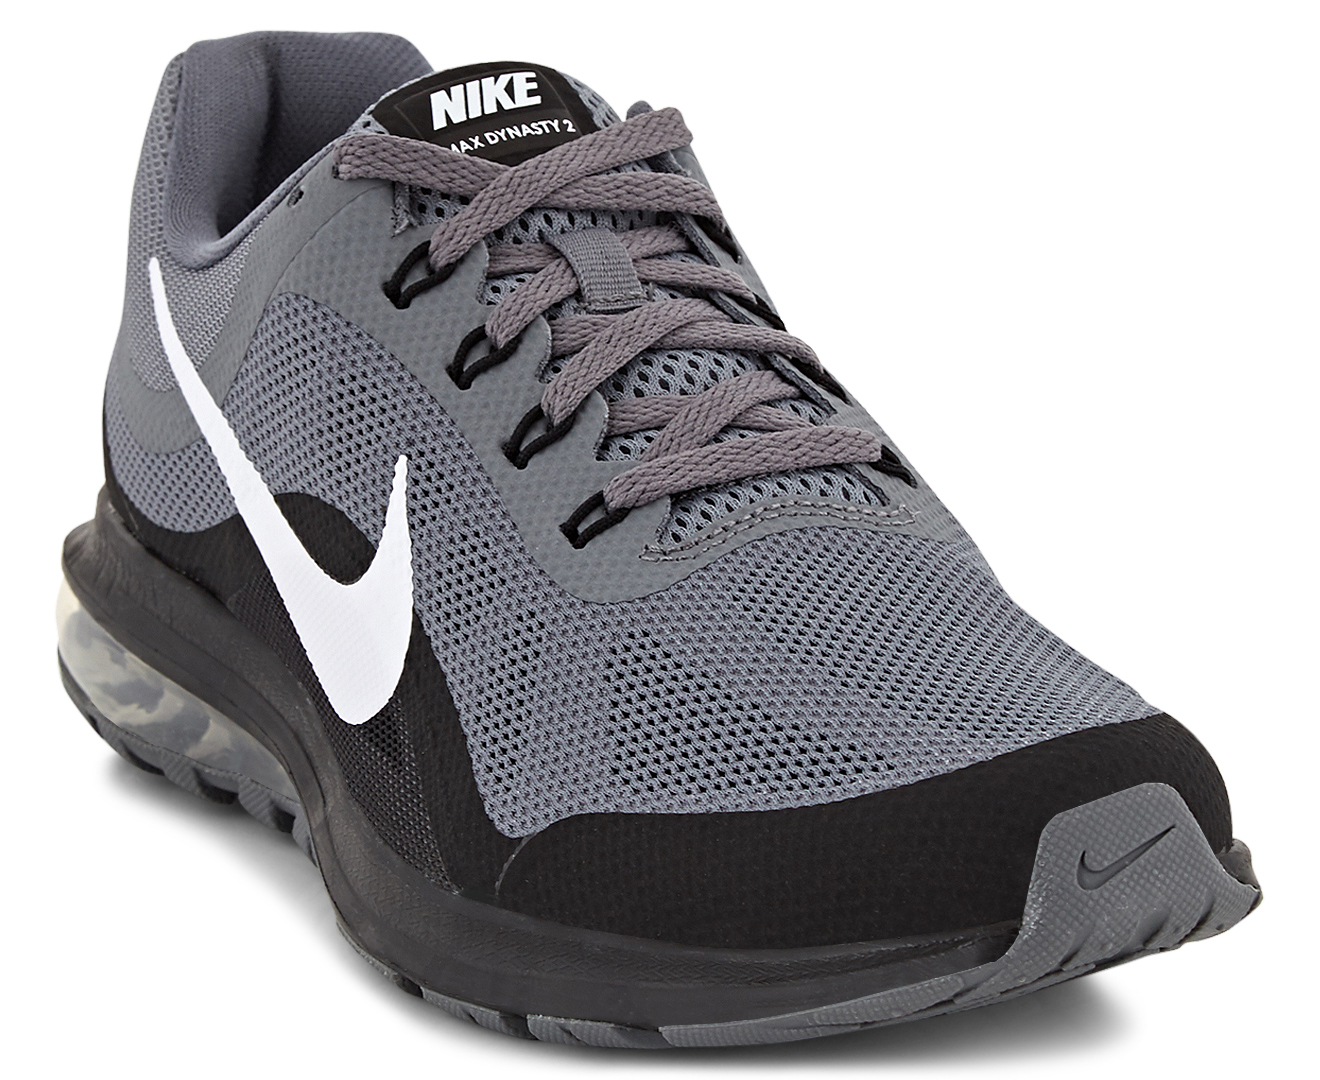 Nike Men's Air Max Dynasty 2 - Cool Grey/White-Black | eBay